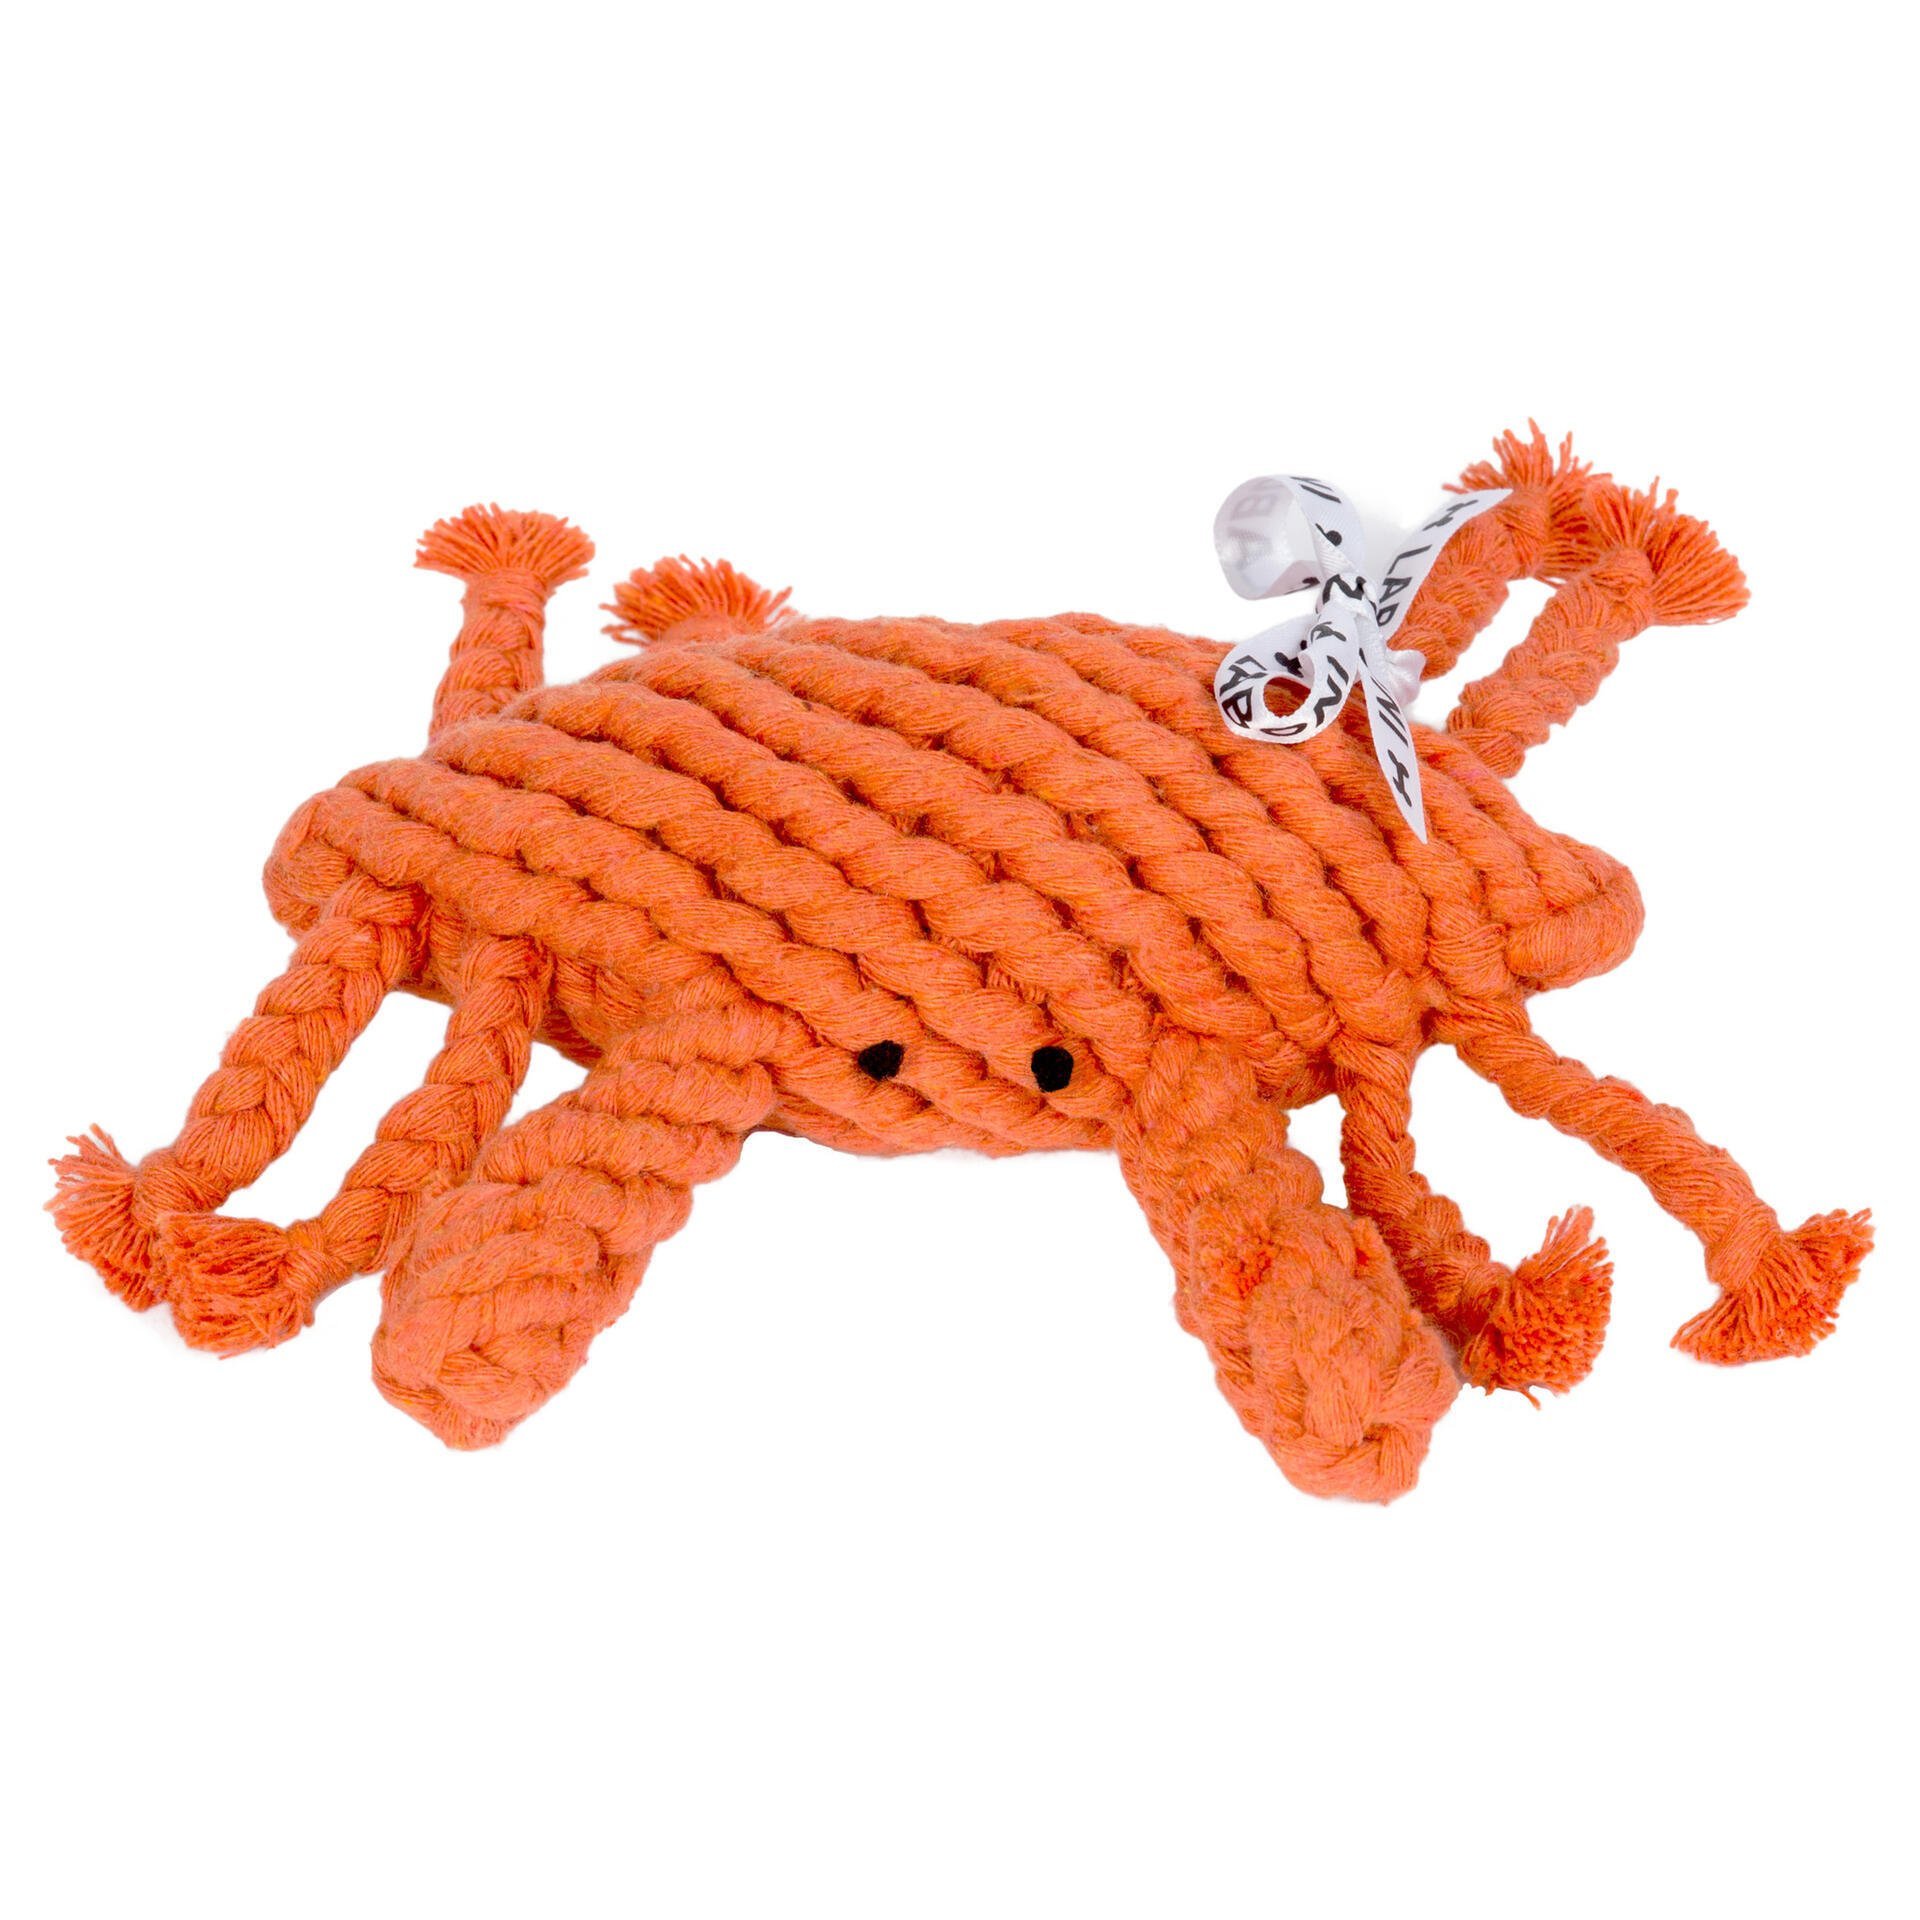 Kristof Krabbe - Hundespielzeug